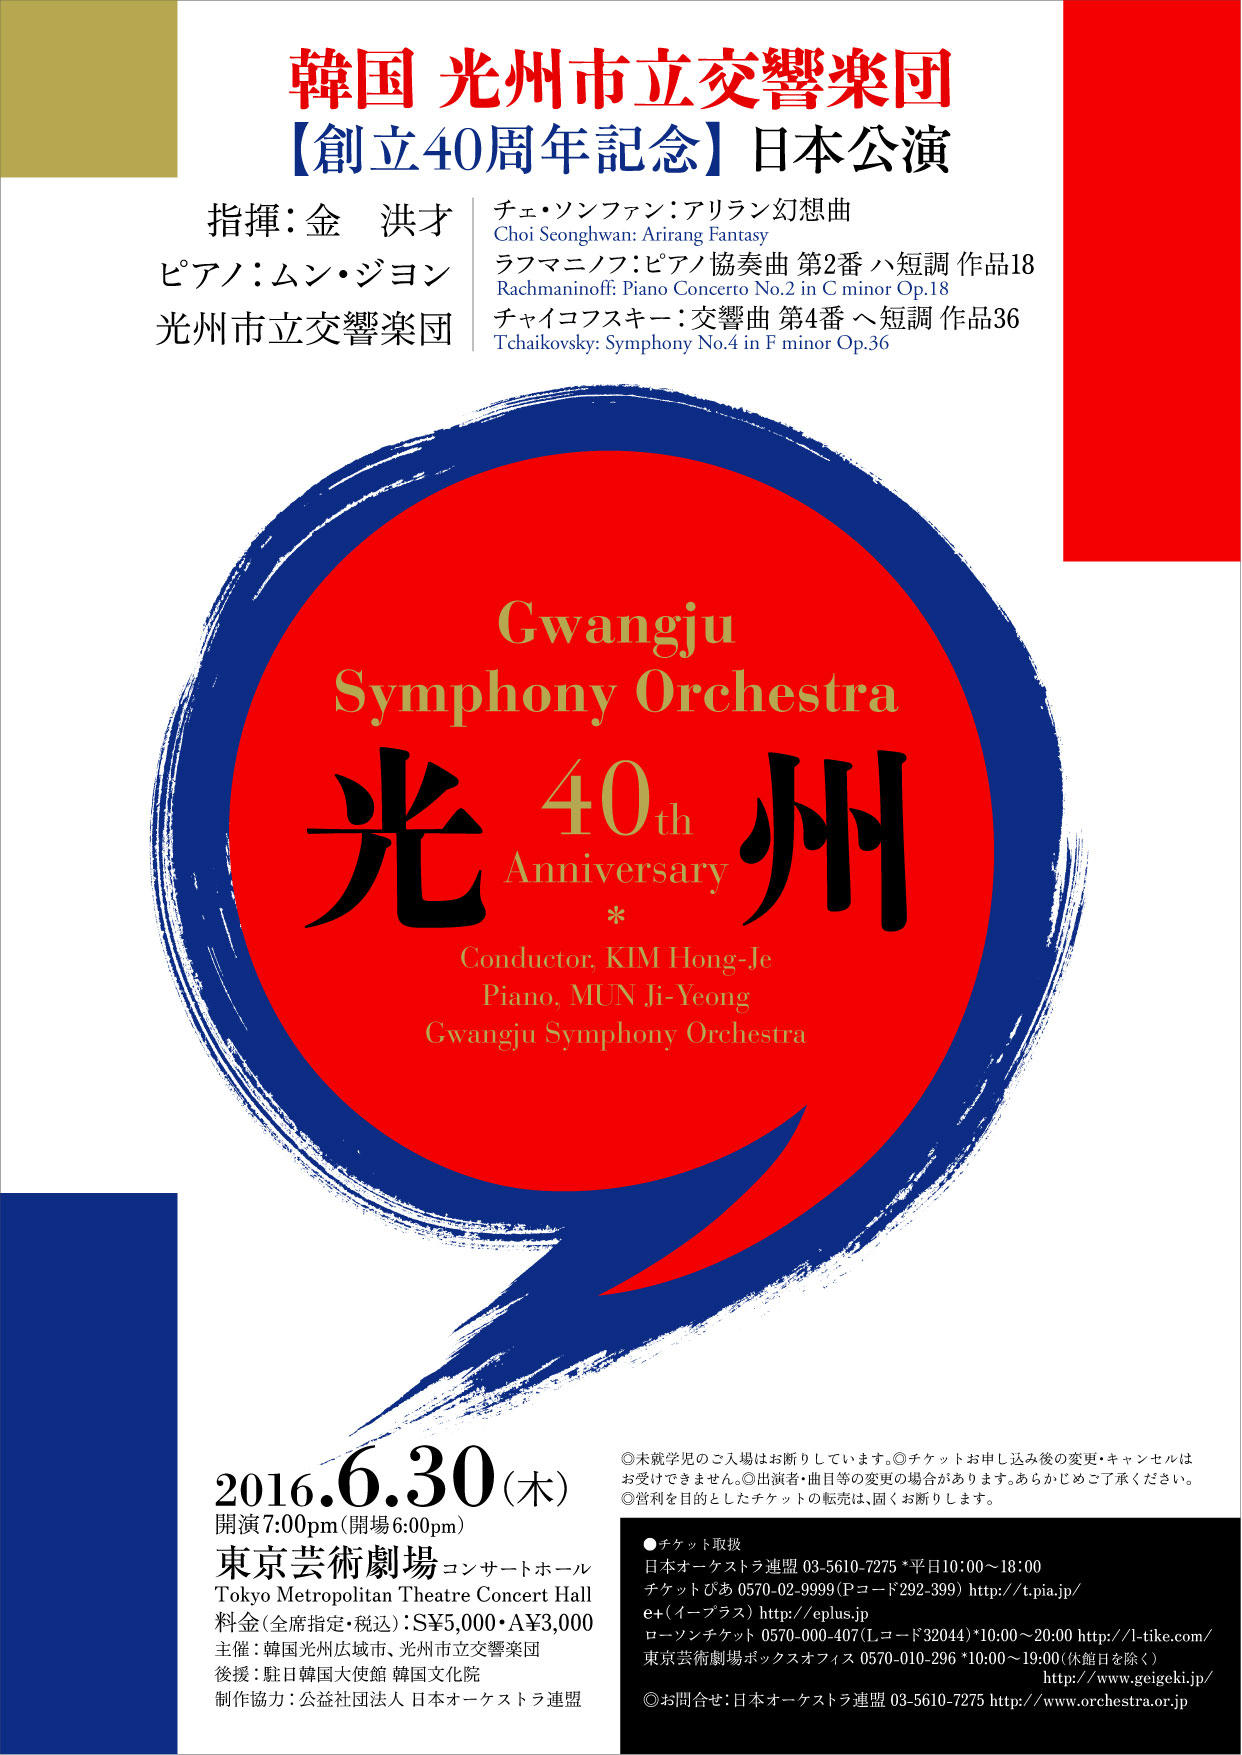 https://www.orchestra.or.jp/concerts/uploads/20160310_ajso_1_1457932521.jpg